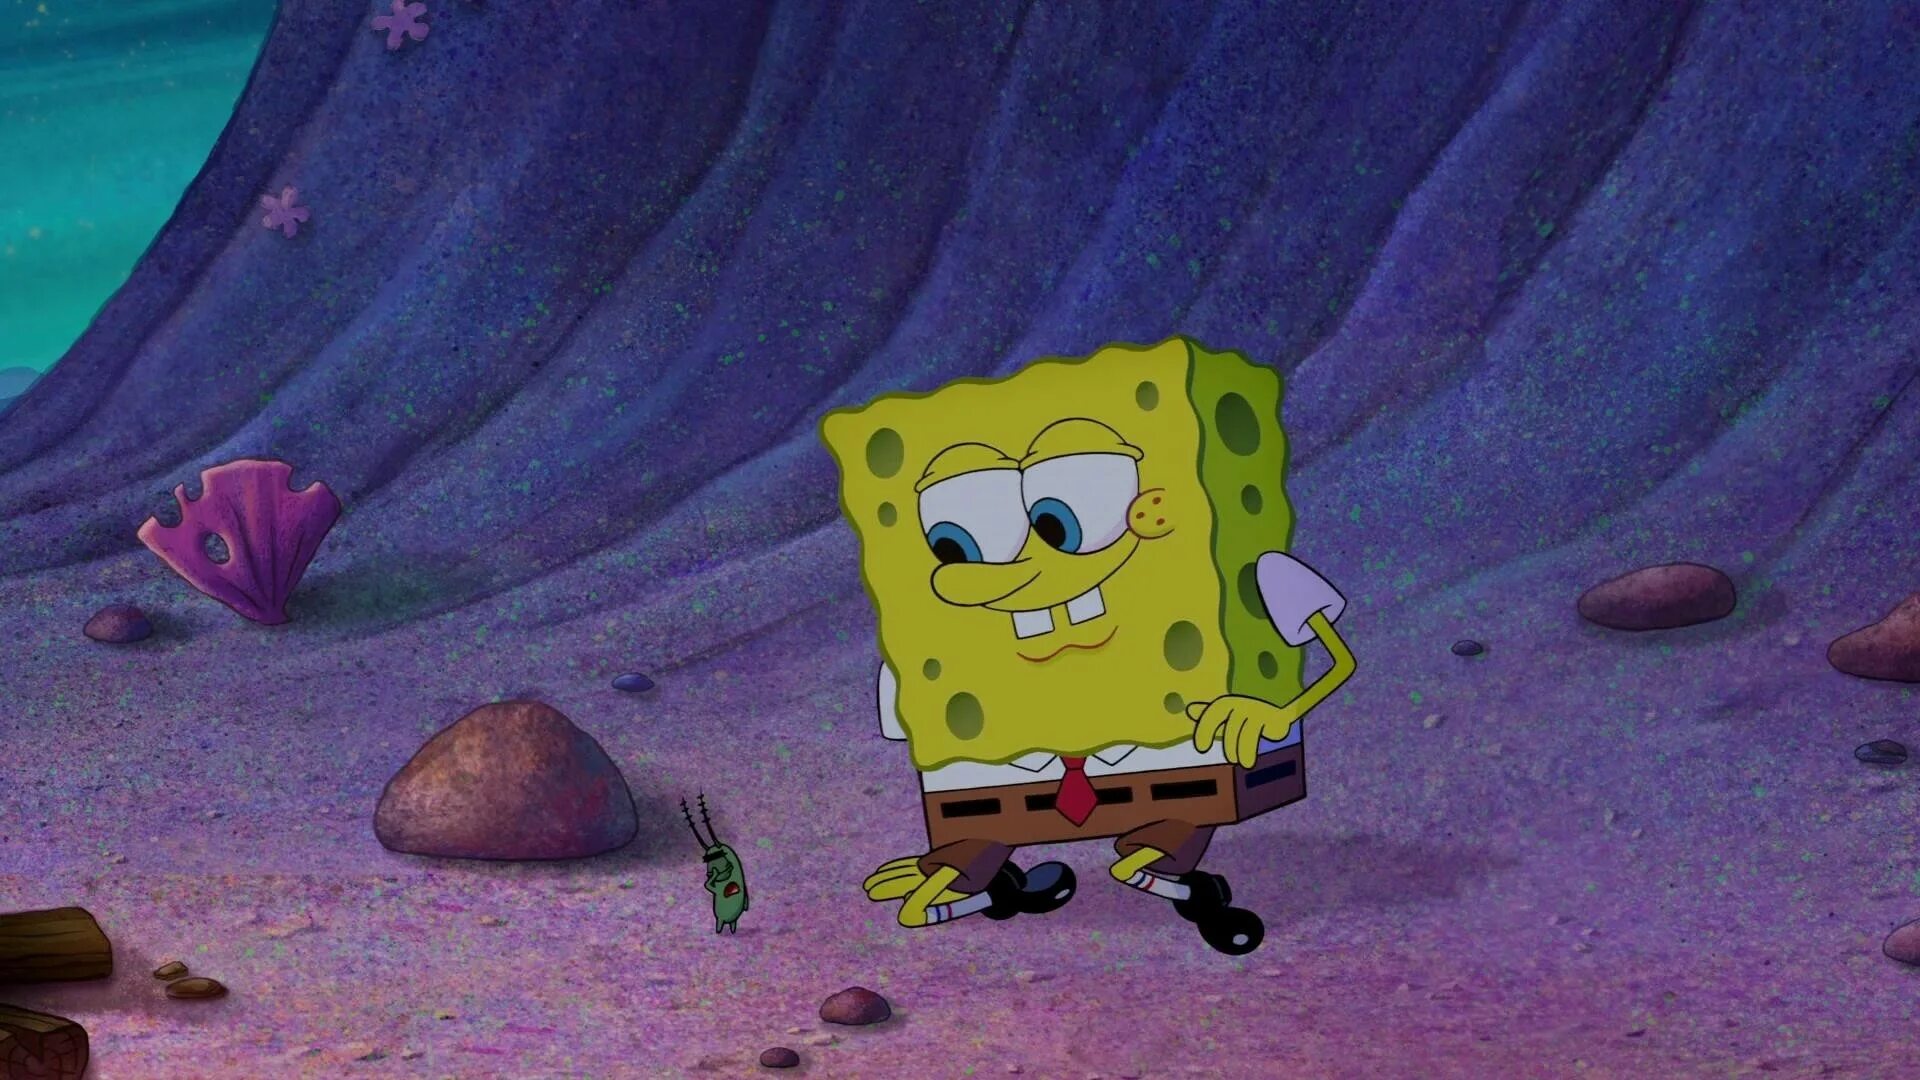 Spongebob patrick. Губка Боб квадратные штаны 2004. Губка Боб Стэнли с квадратные штаны. Губка Боб квадратные штаны Патрик. Губка Боб квадратные штаны Эстетика.